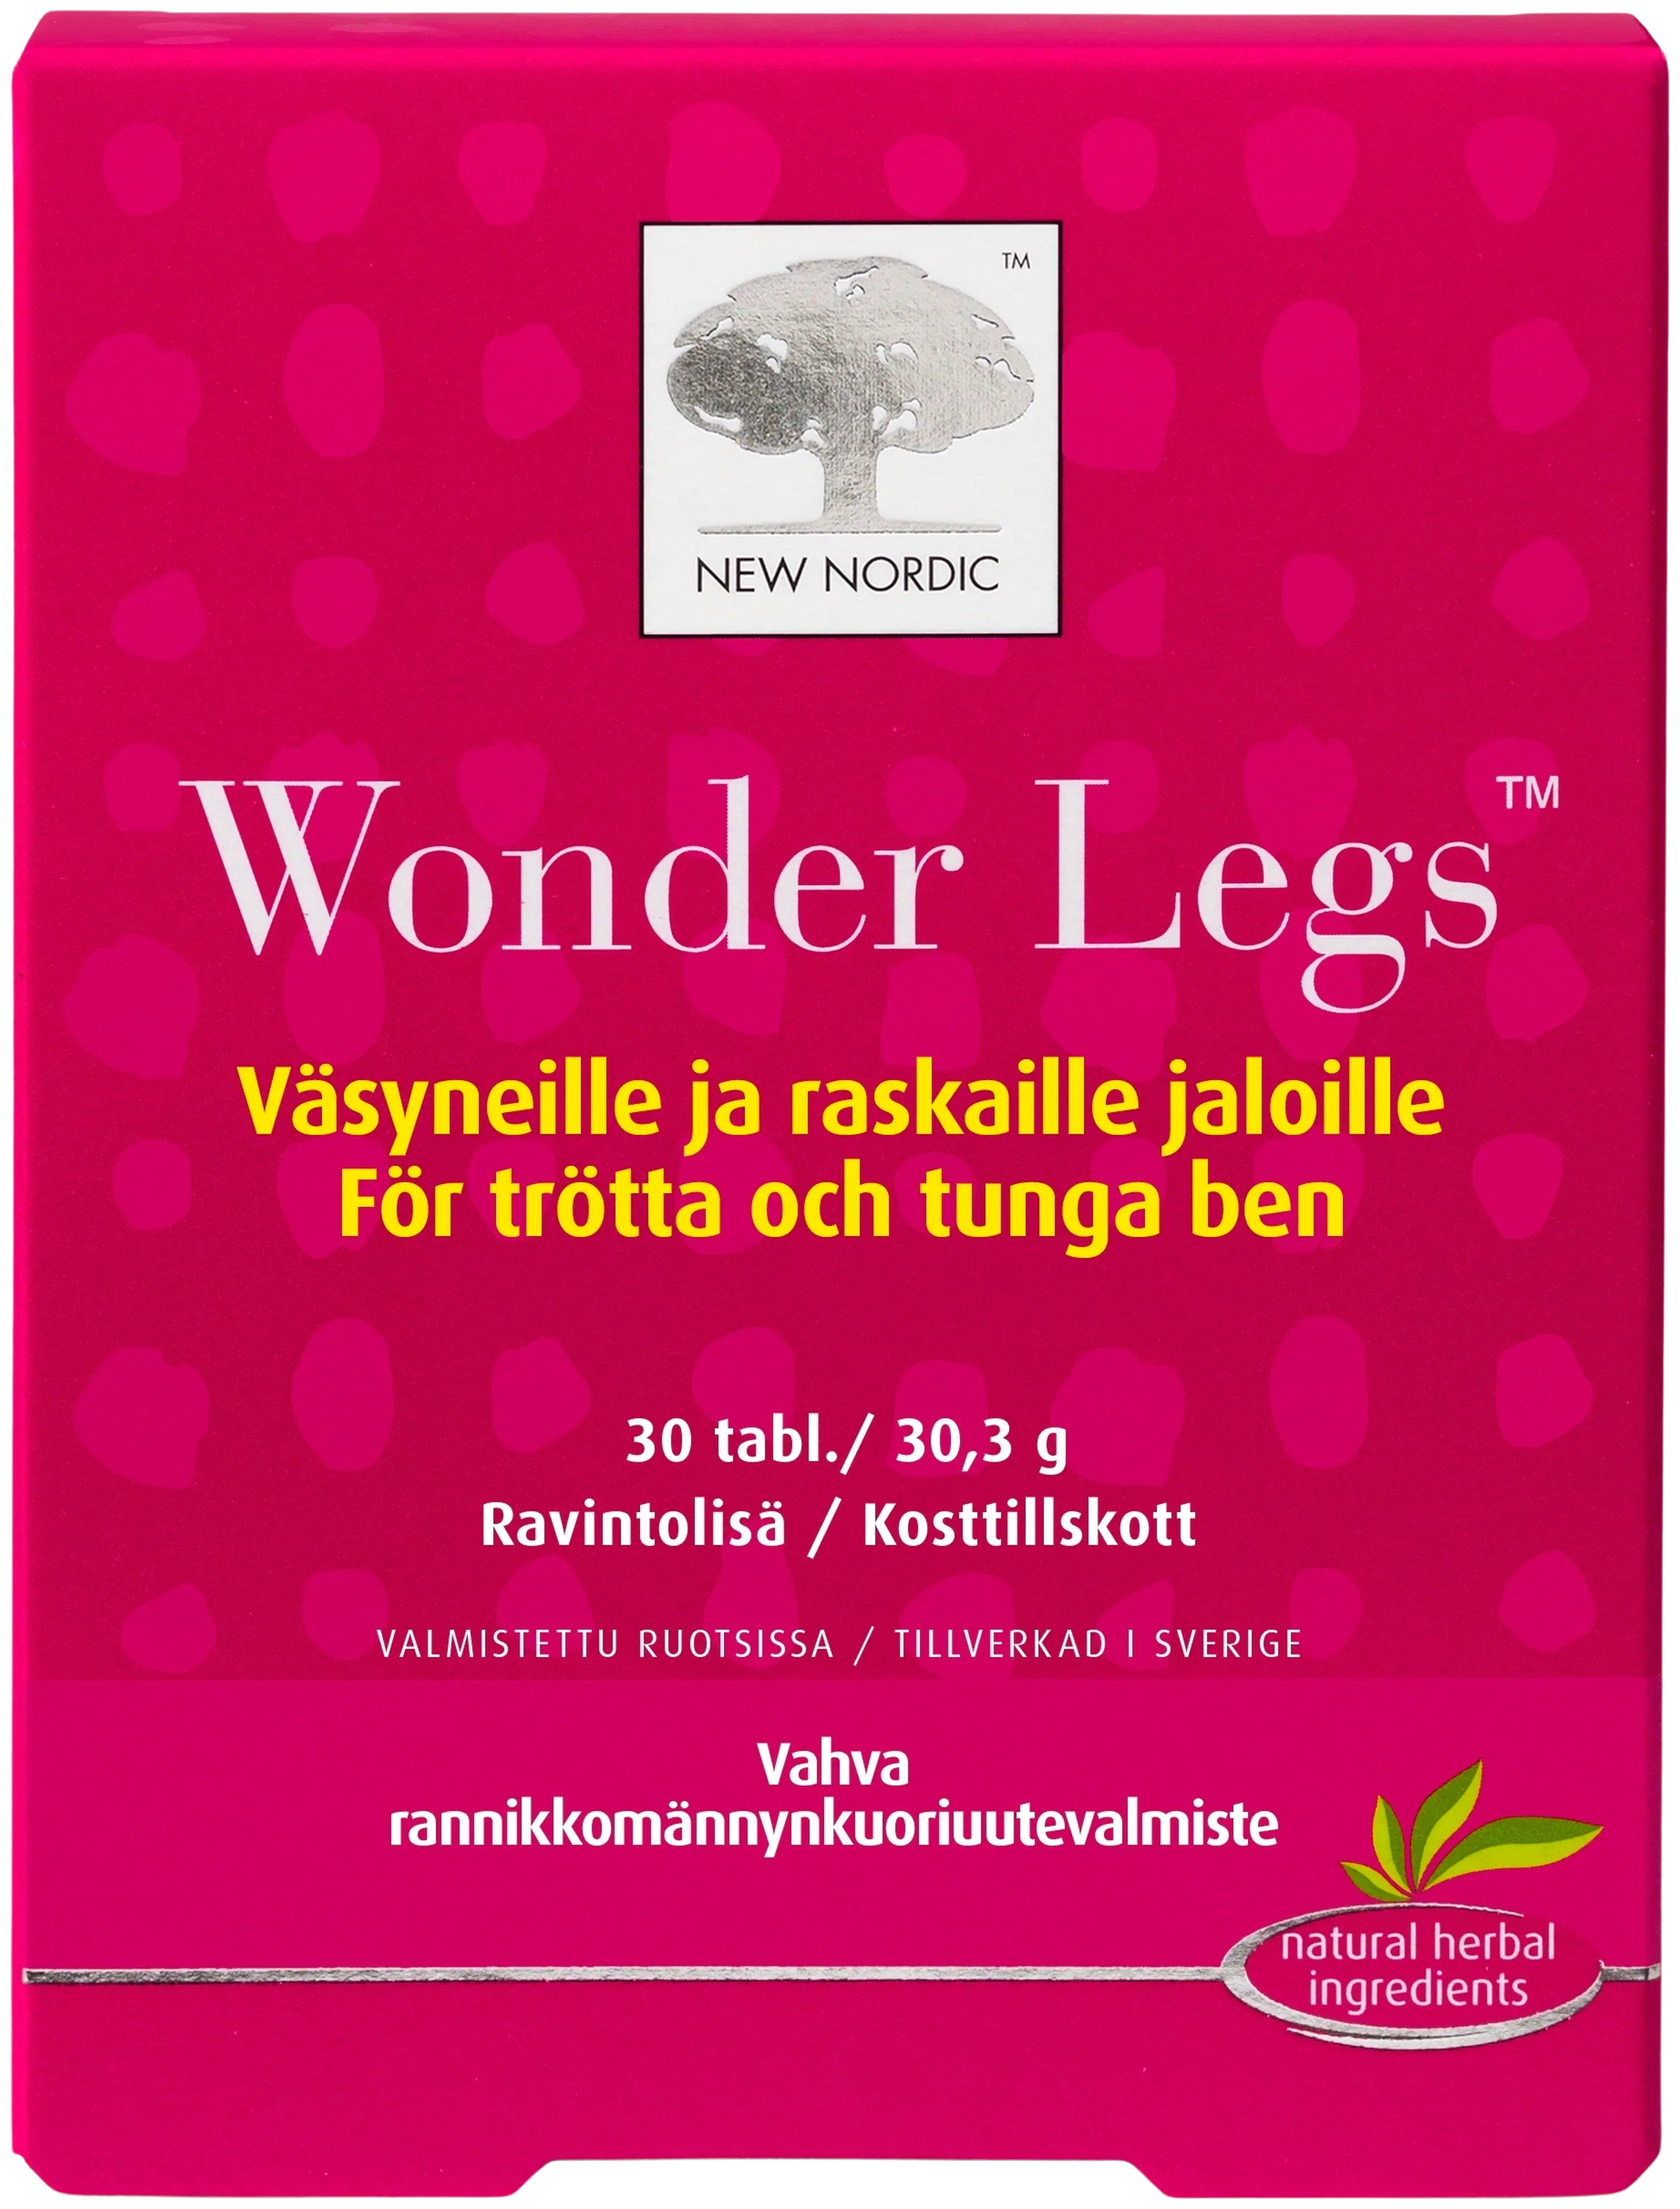 New Nordic Wonder Legs™ ravintolisä 30 tabl./ 30,3 g